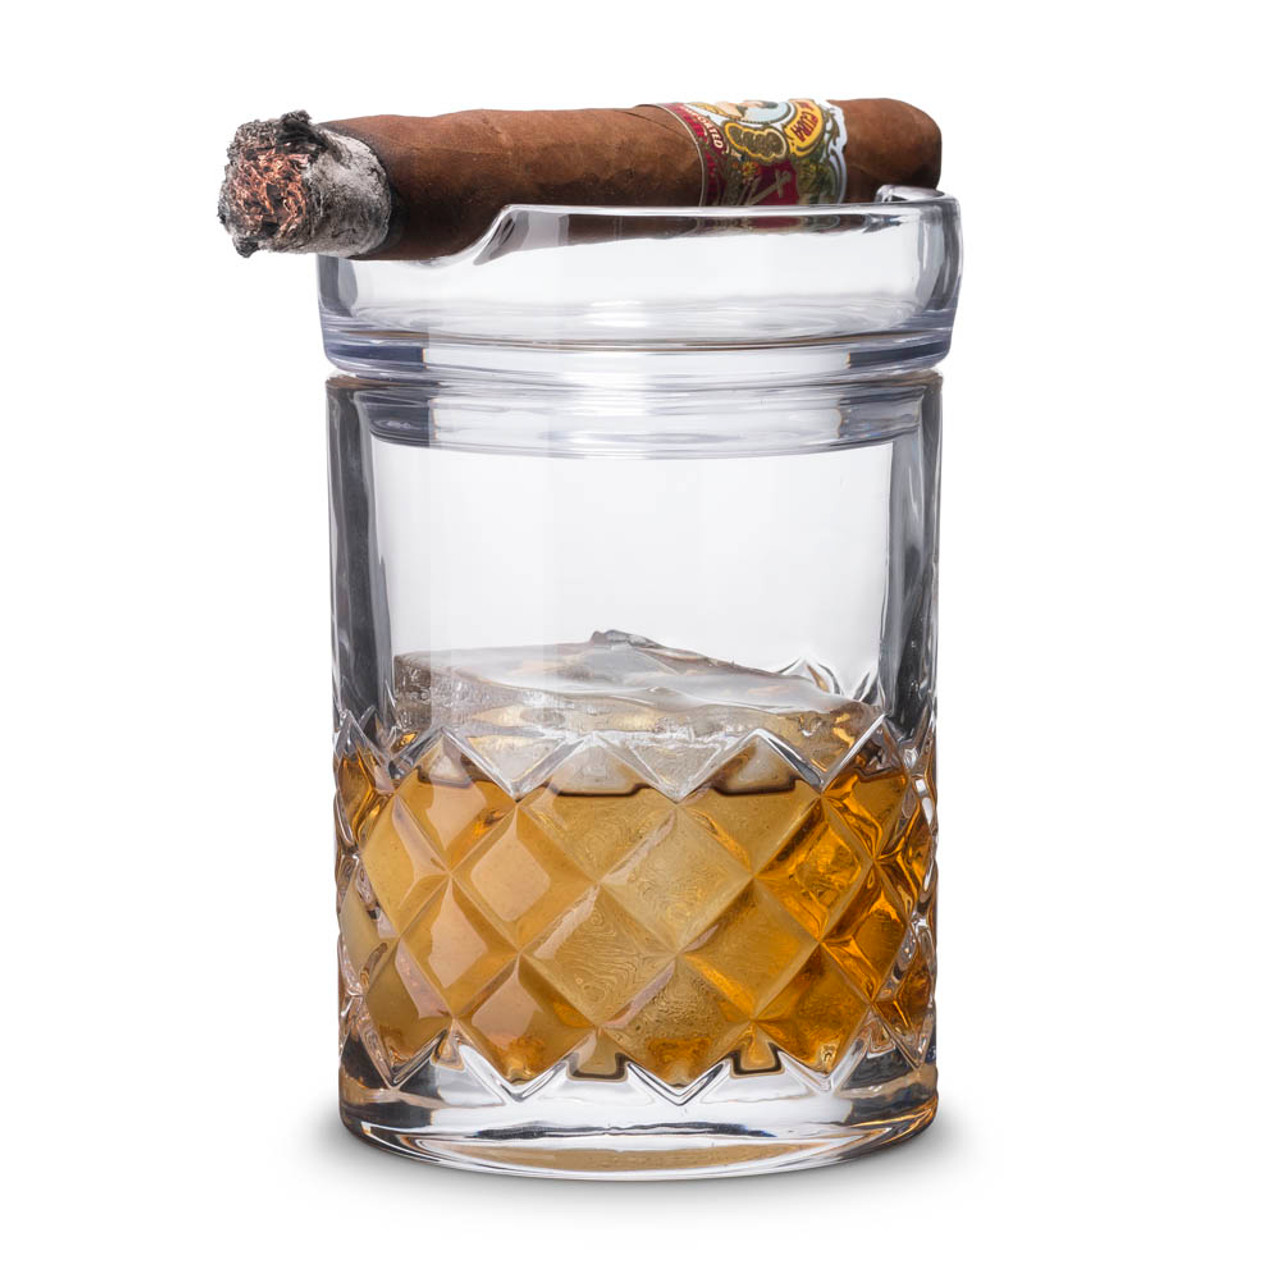 Godinger Whiskey & Cigar Gift Set - Includes Rocks Glass with Cigar